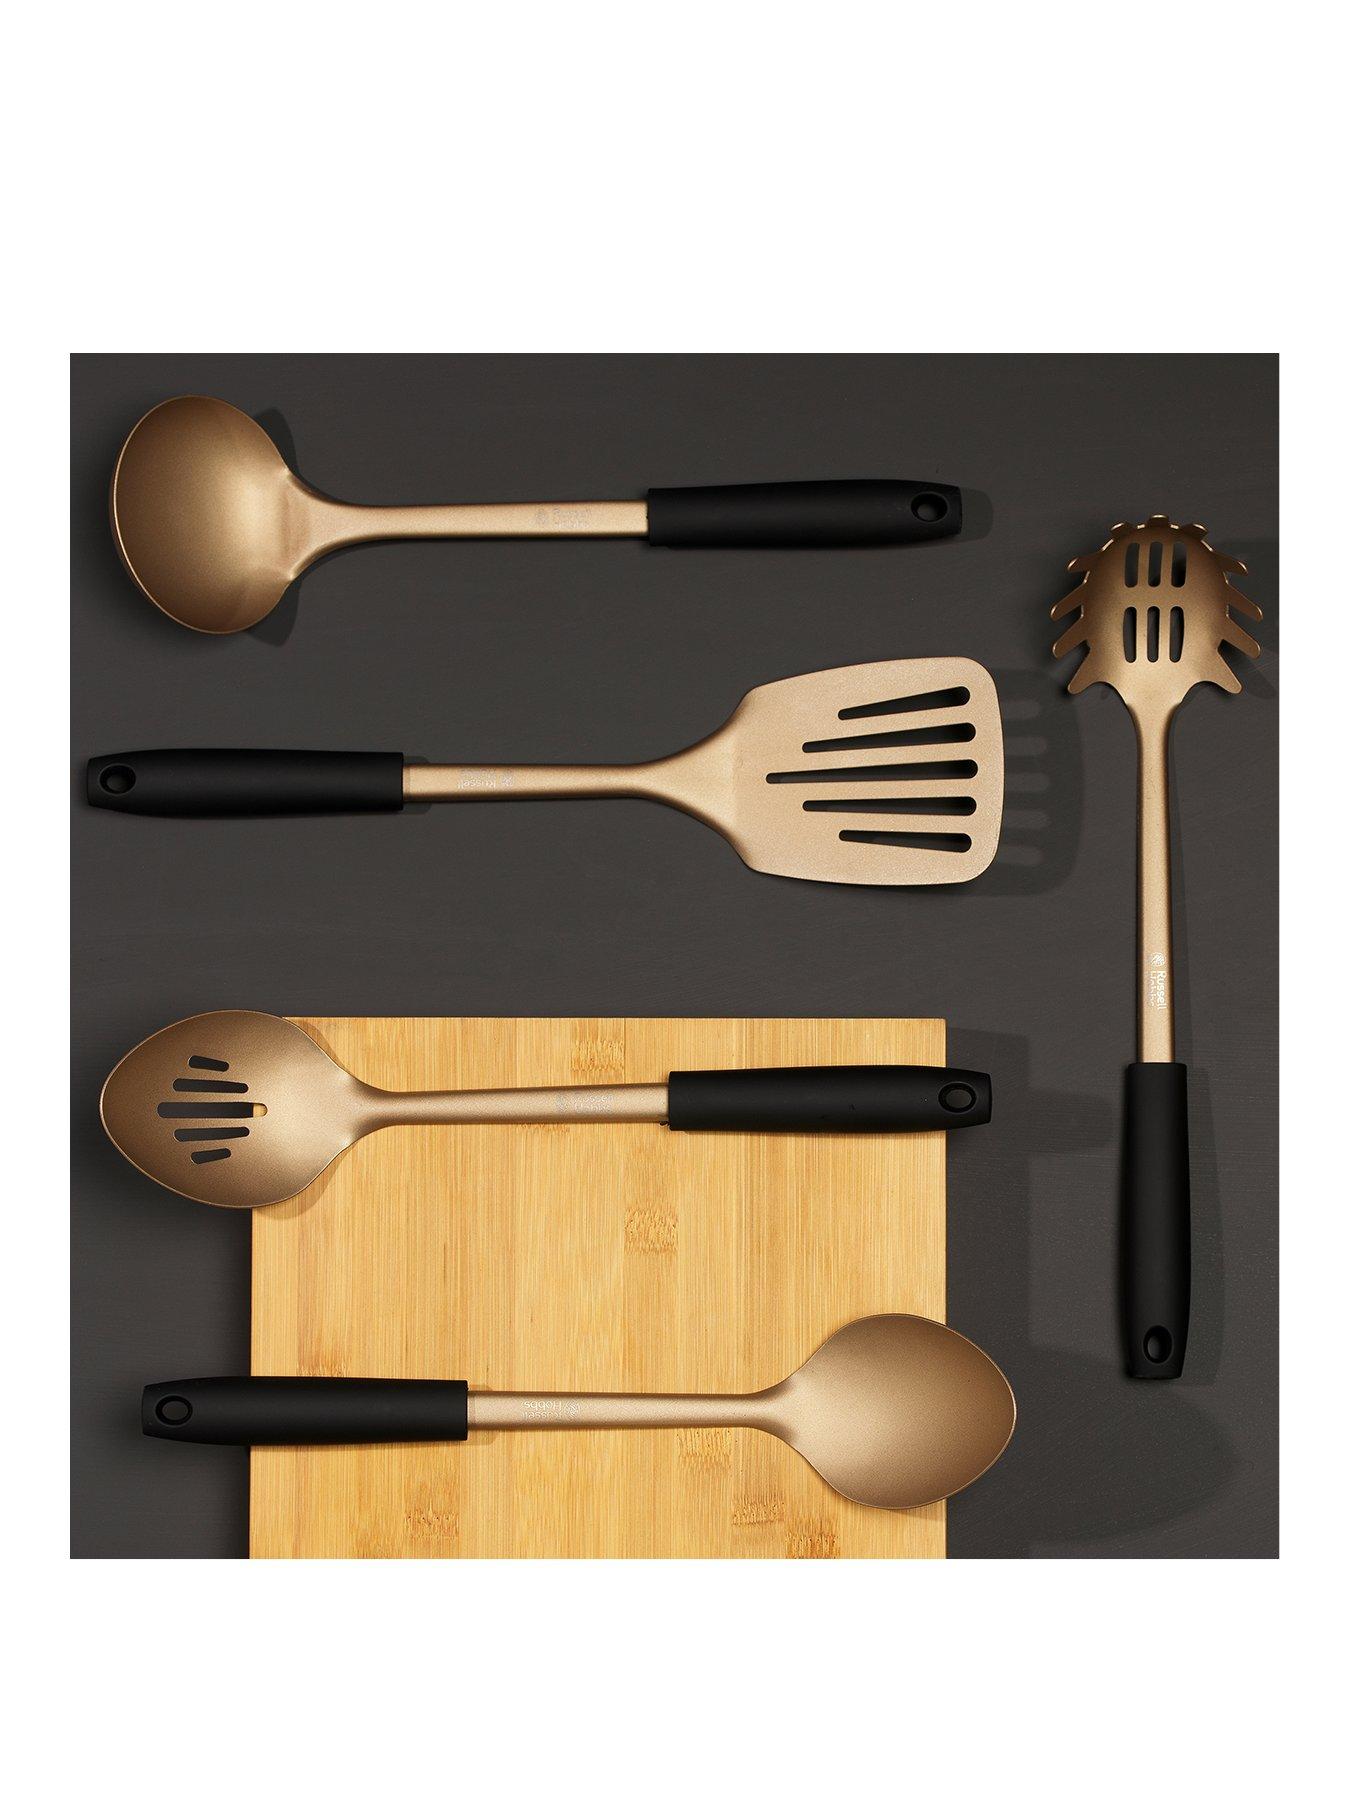 Anti-scratch Kitchen Utensils Set, Nylon, Cooking Spoon, Slotted Spoon,  Fish Slice, 34 Cm (14), 3 Piece Set, Black